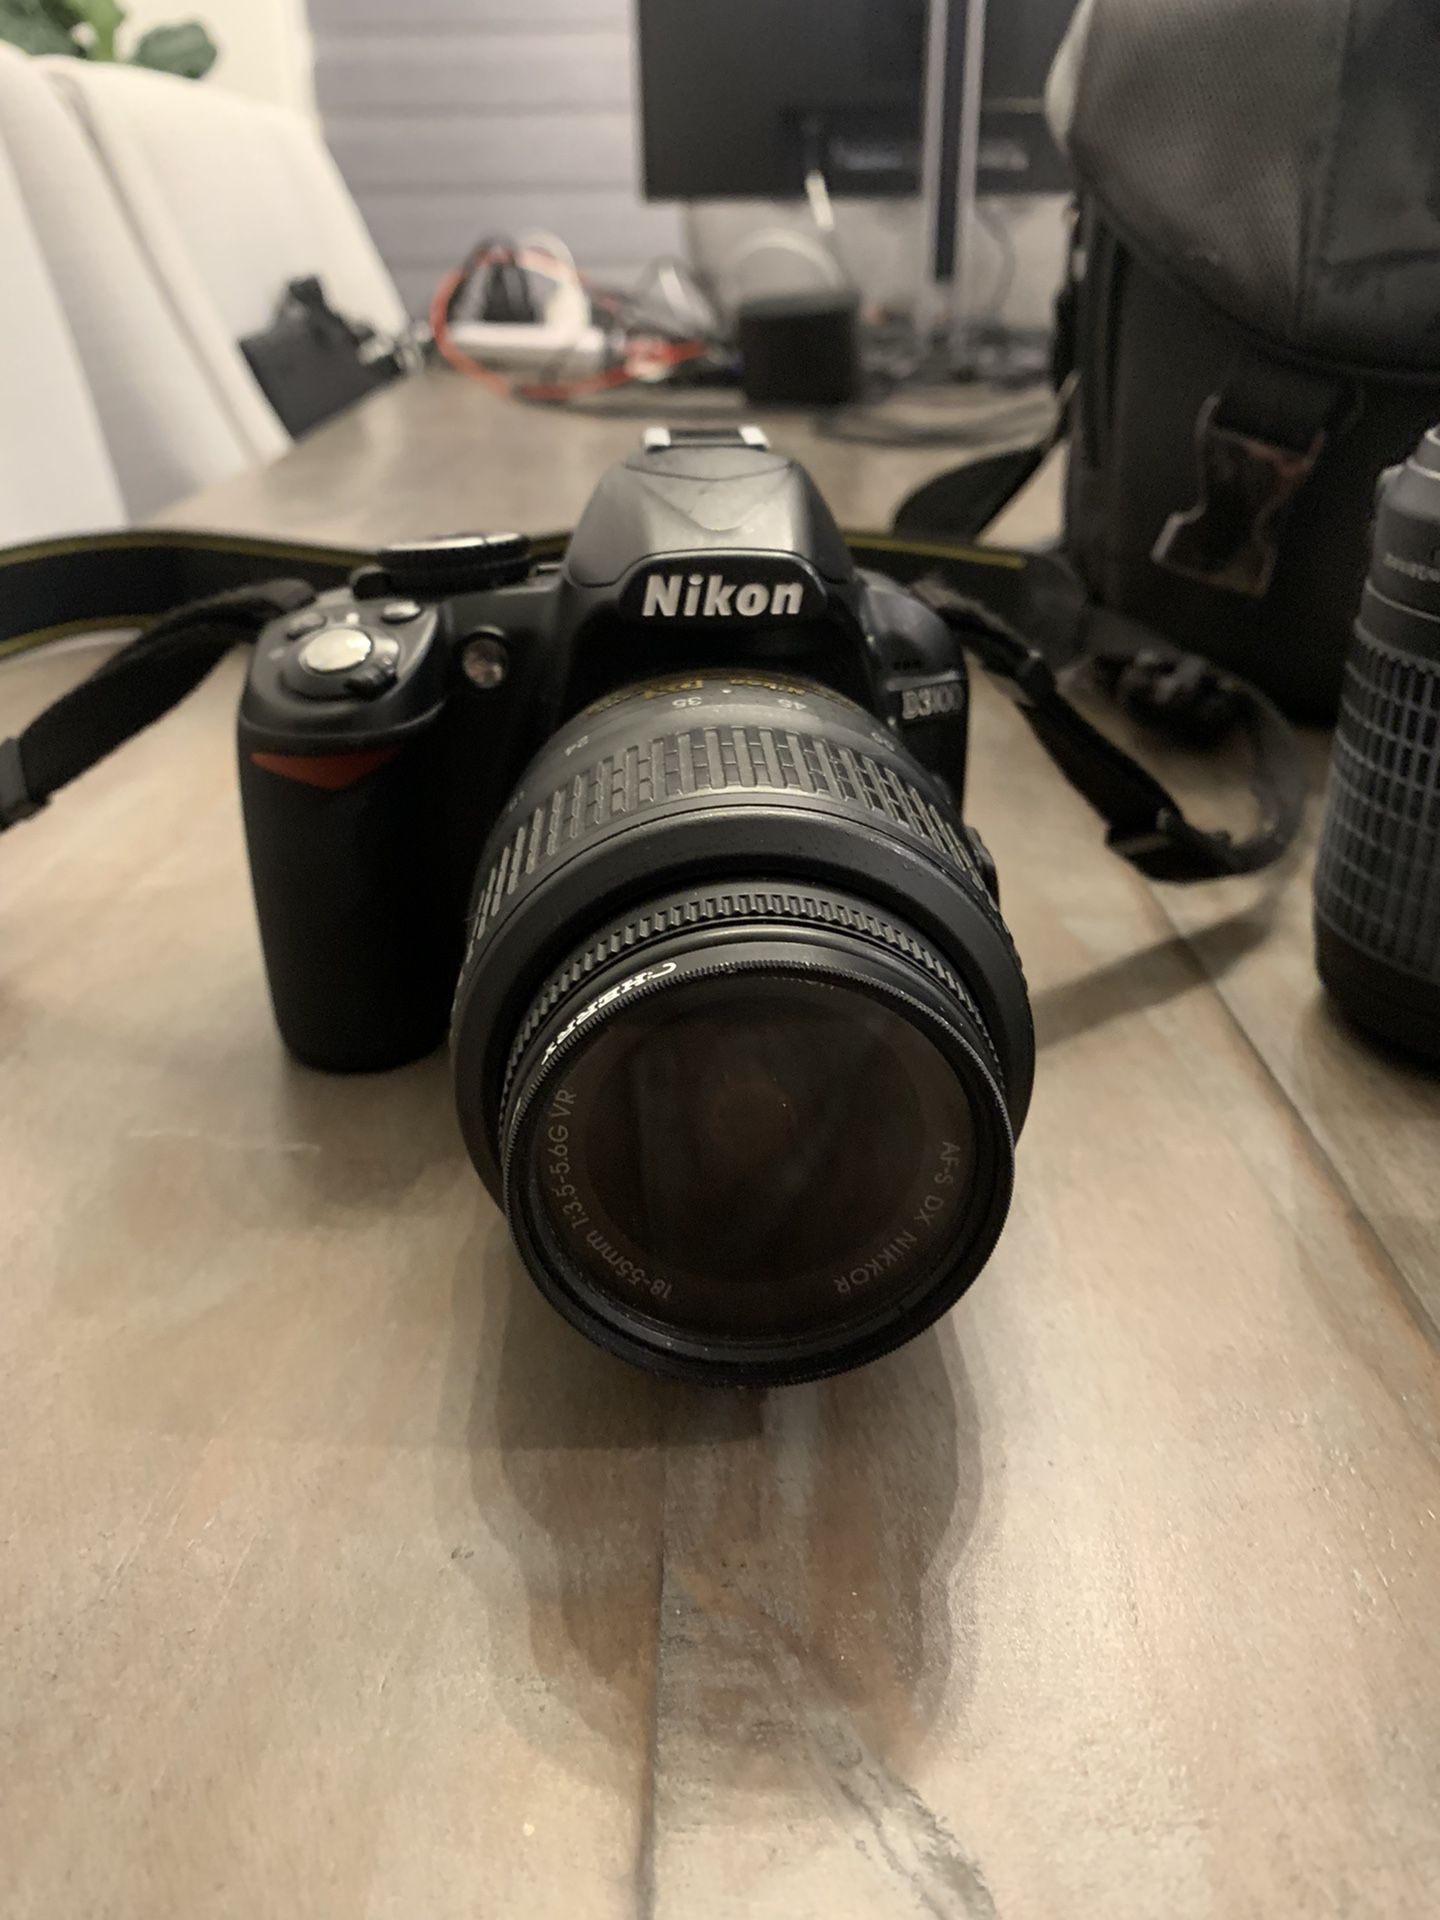 Nikon D3100 14.2MP Digital SLR Double Zoom Lense kit With18-55mm And 55-200mm DX Zoom Lenses Black